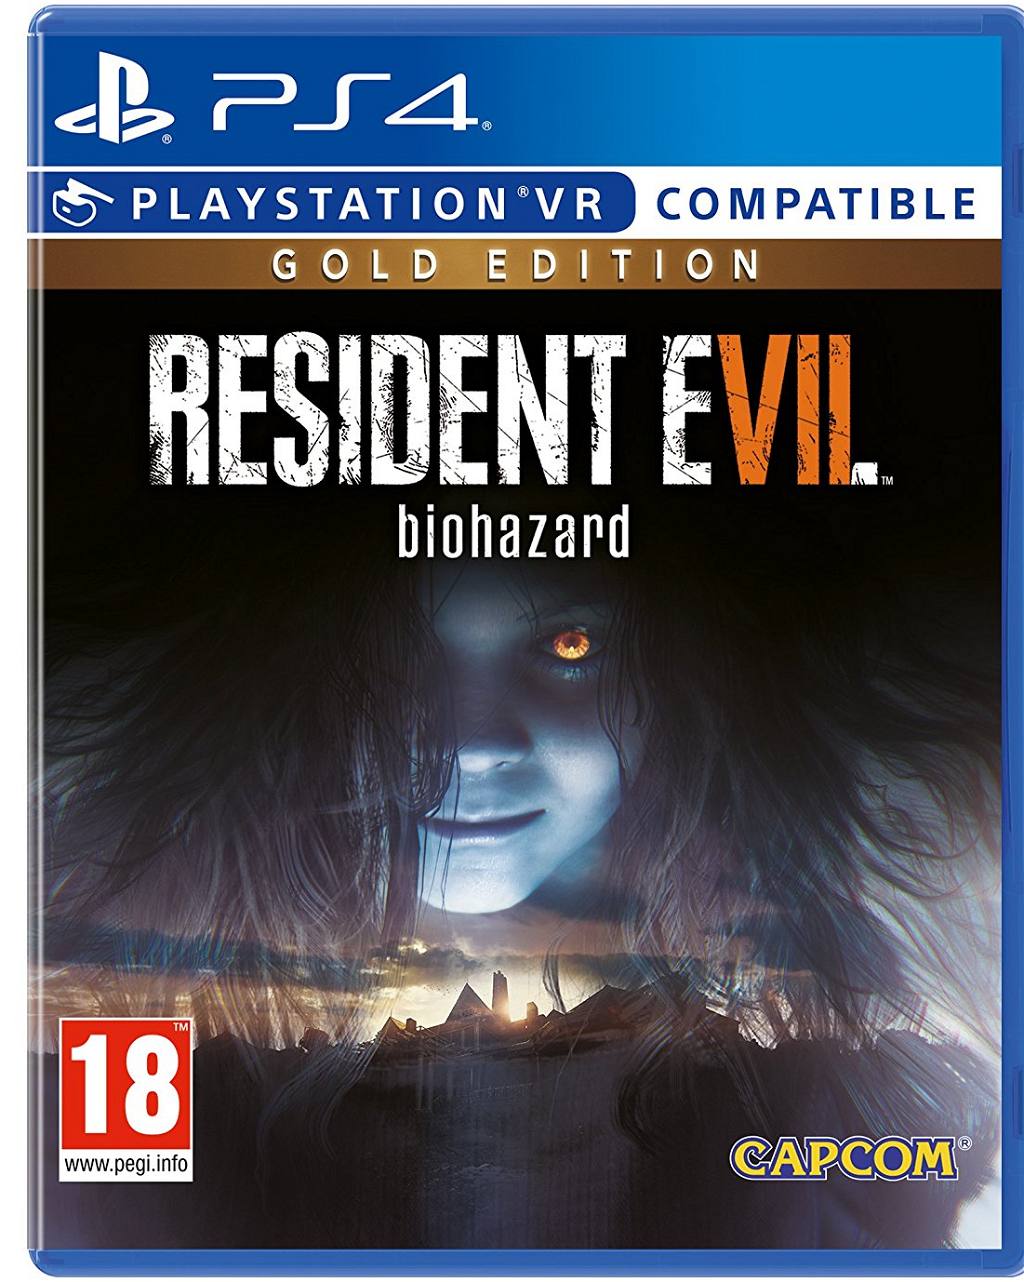 Evil 7: biohazard [Gold Edition] for PlayStation 4, PlayStation VR